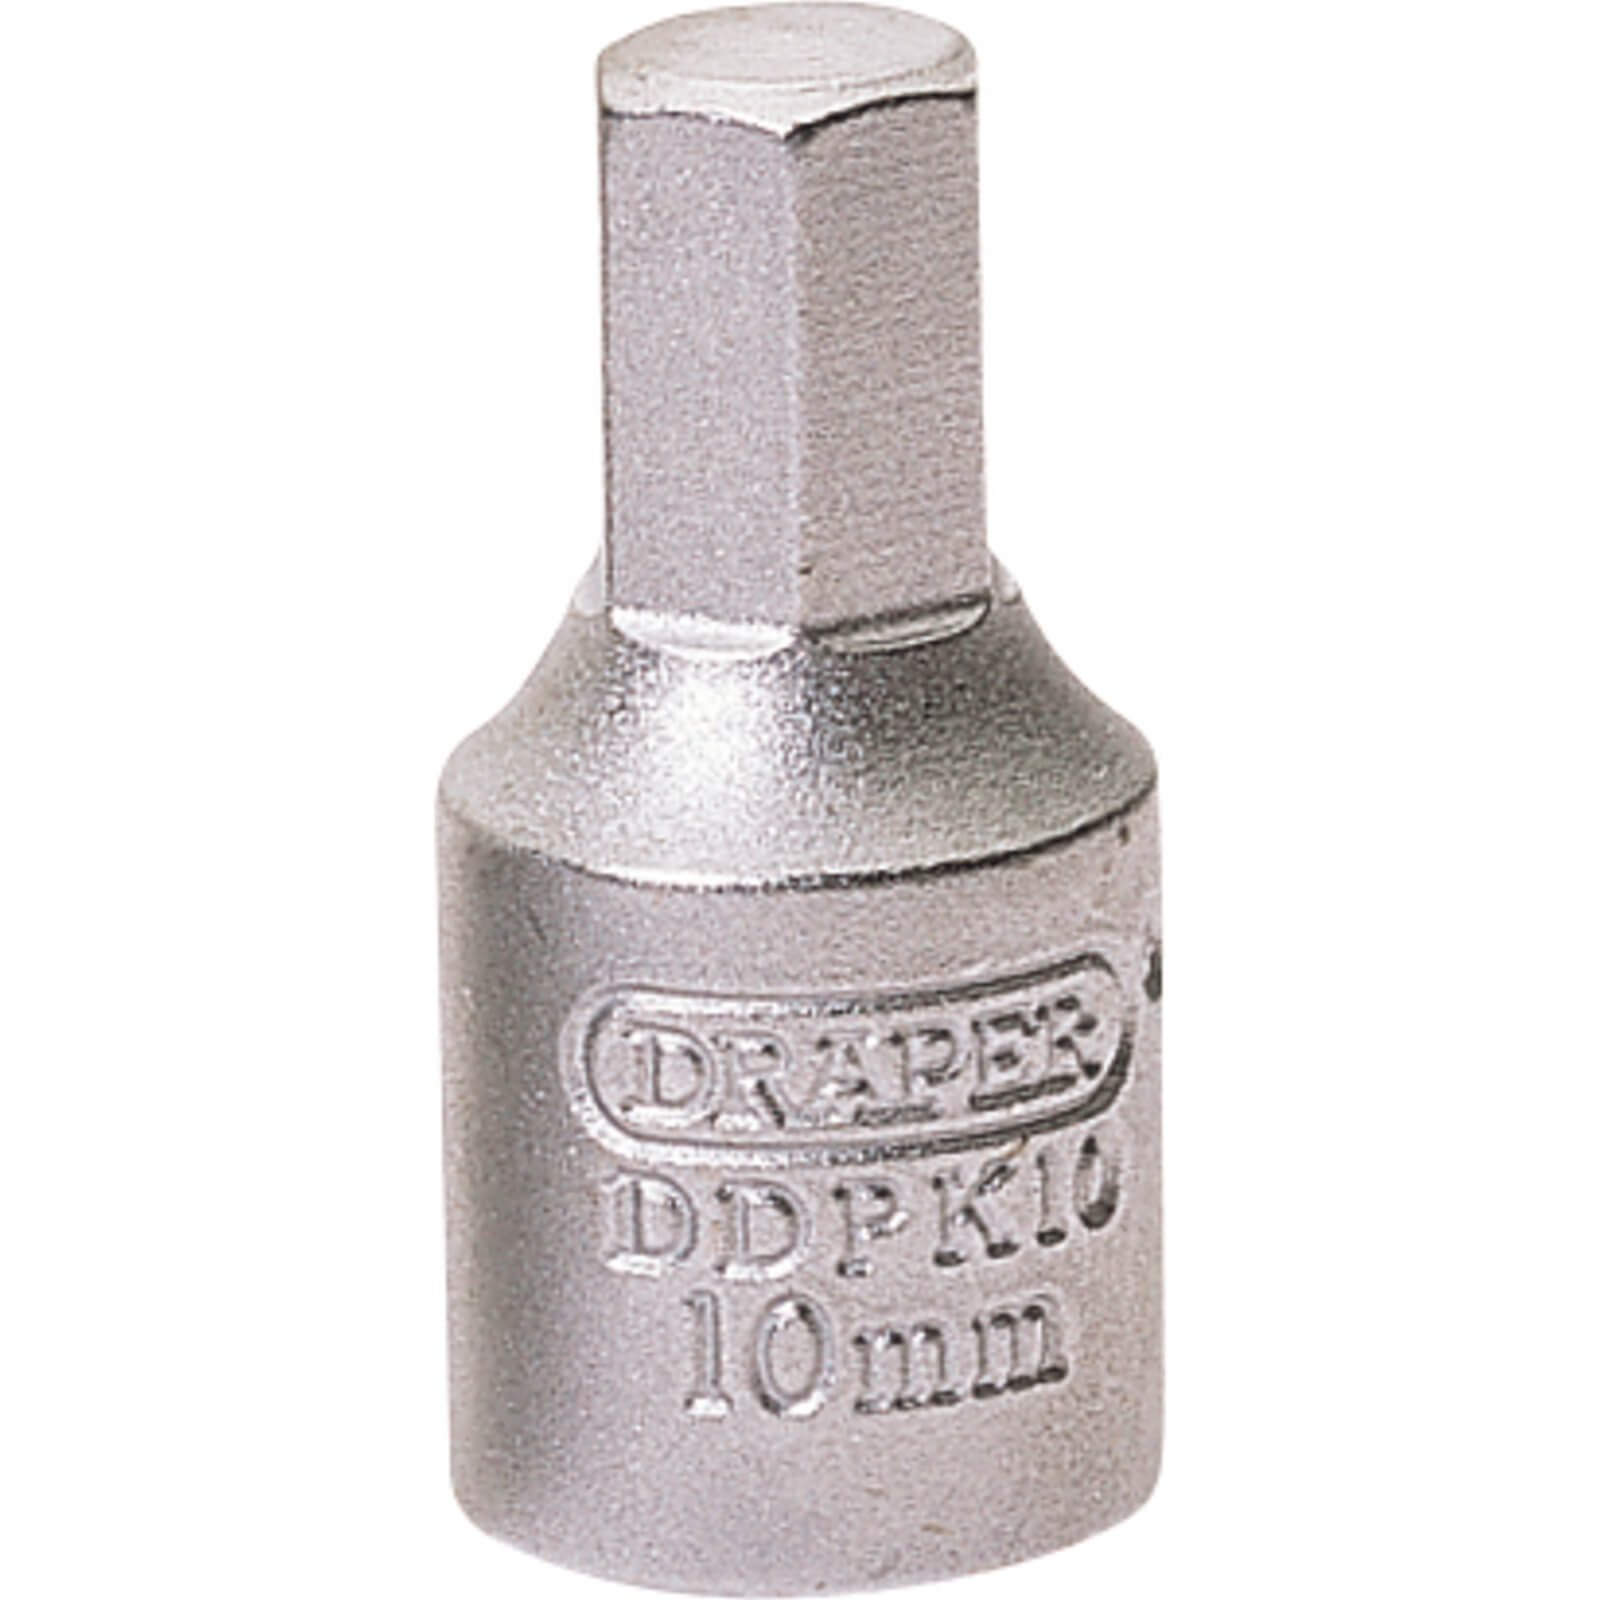 Image of Draper Metric Drain Plug Key 3/8" 10mm